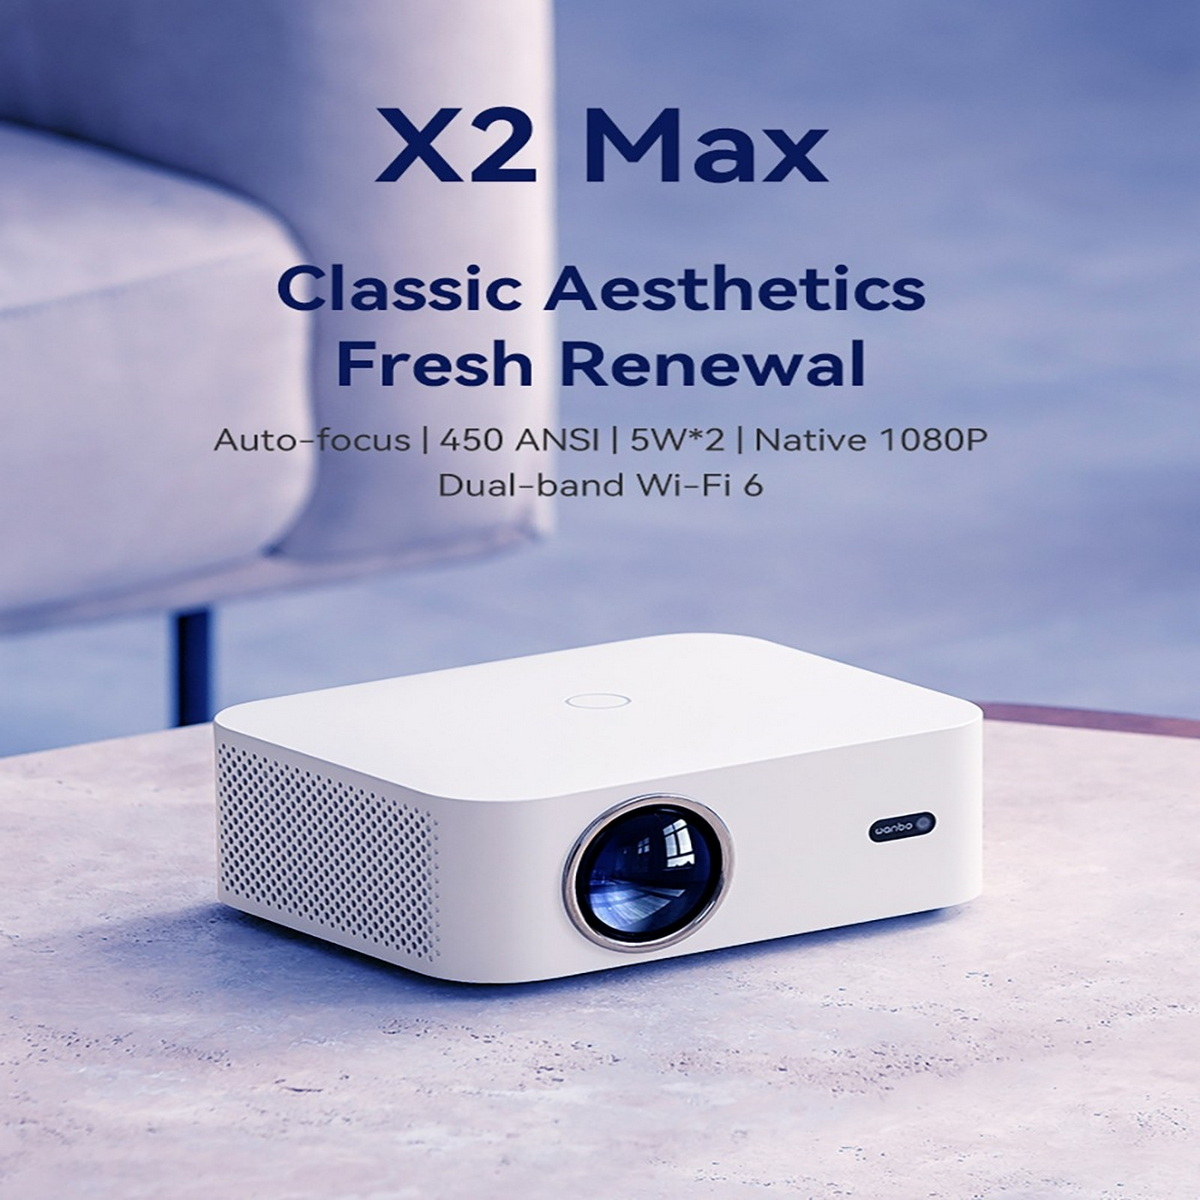 X2 Beamer(HD+, ANSI-Lumen) Max WANBO 450